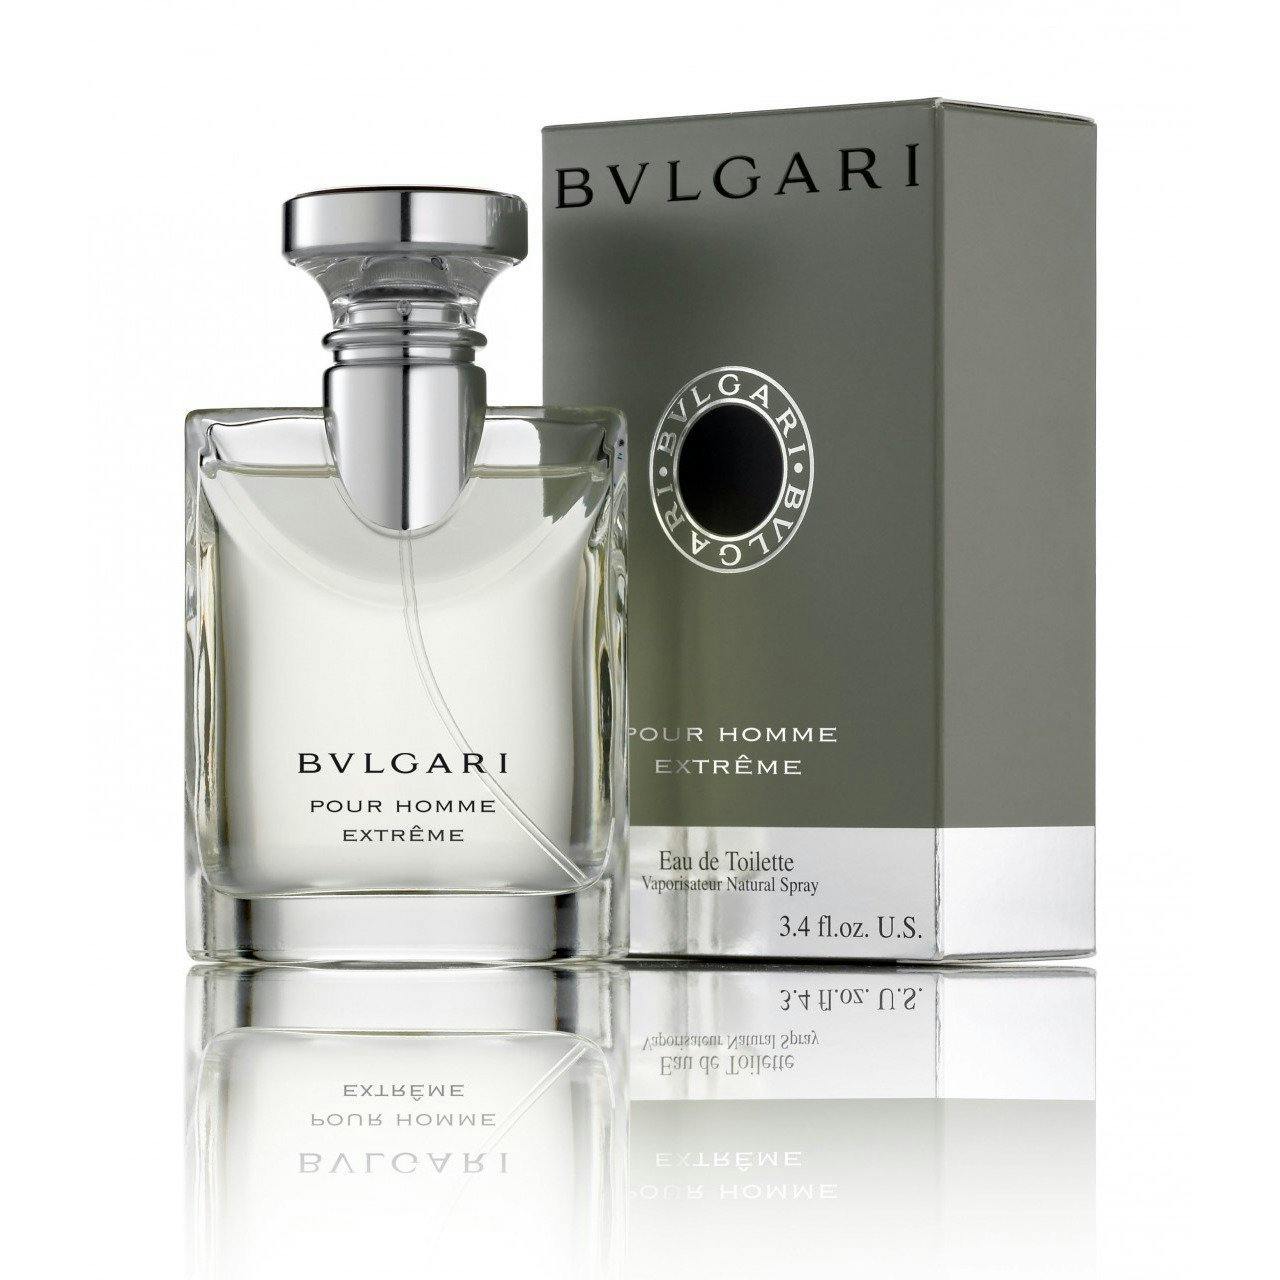 best selling bvlgari perfume